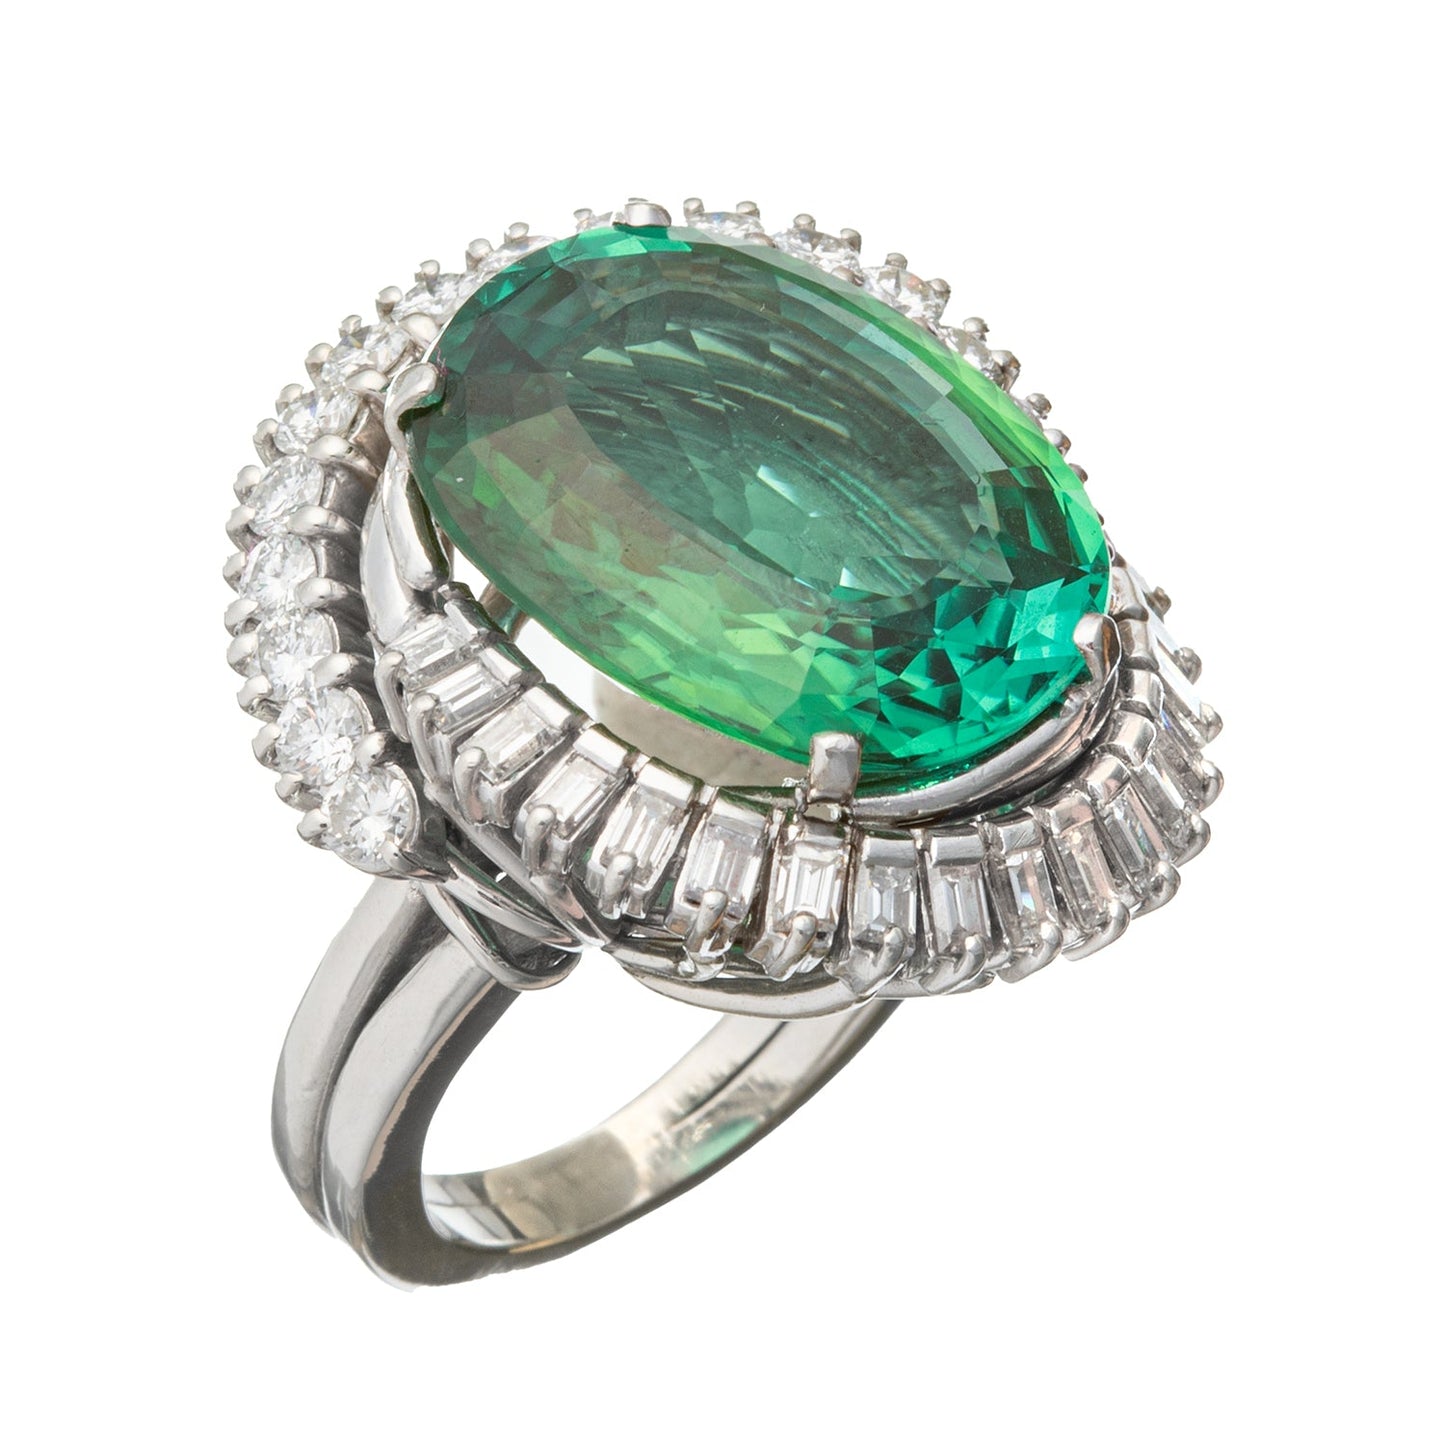 Estate Collection - 14ct Green Tourmaline Diamond Cocktail Ring